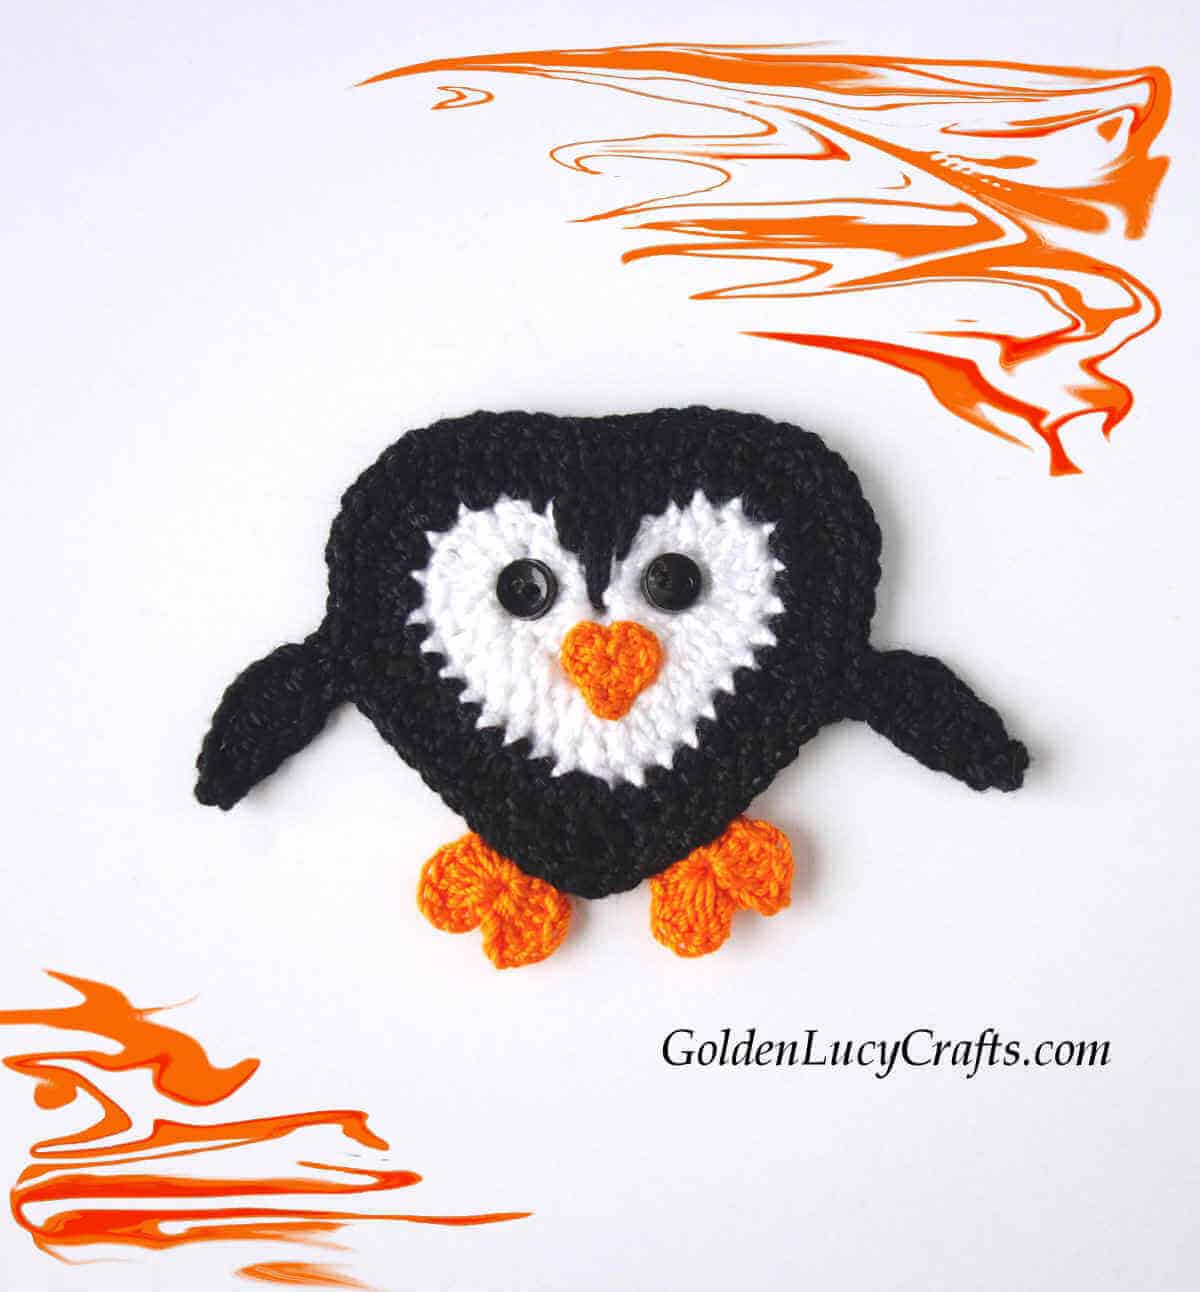 Crochet heart-shaped penguin applique.